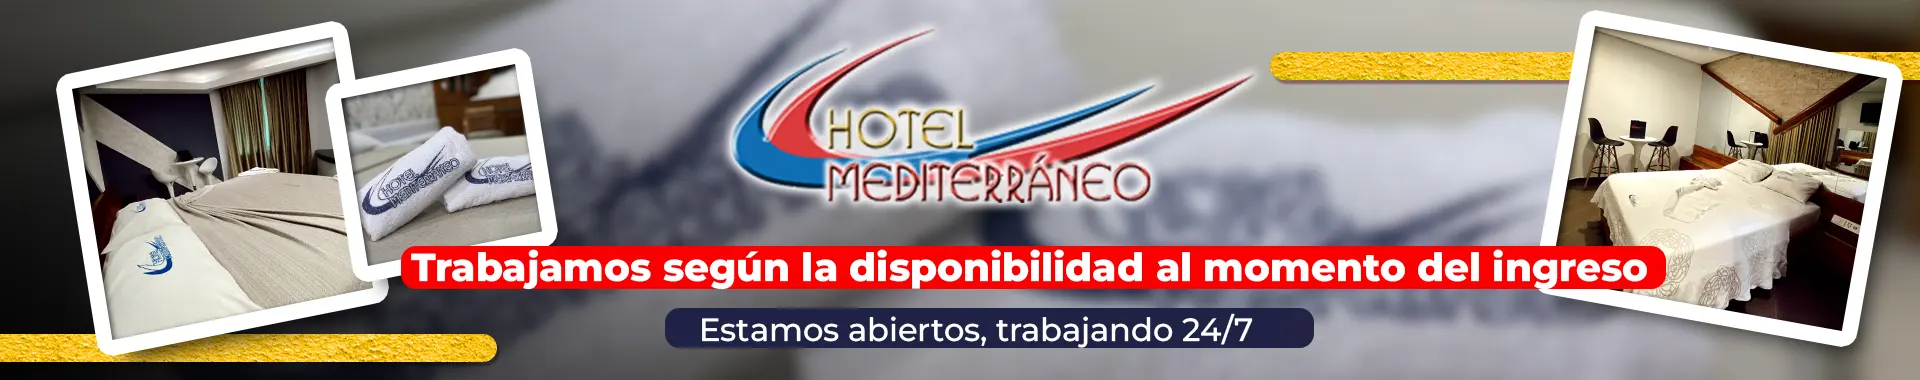 Imagen 3 del perfil de Hotel Mediterráneo